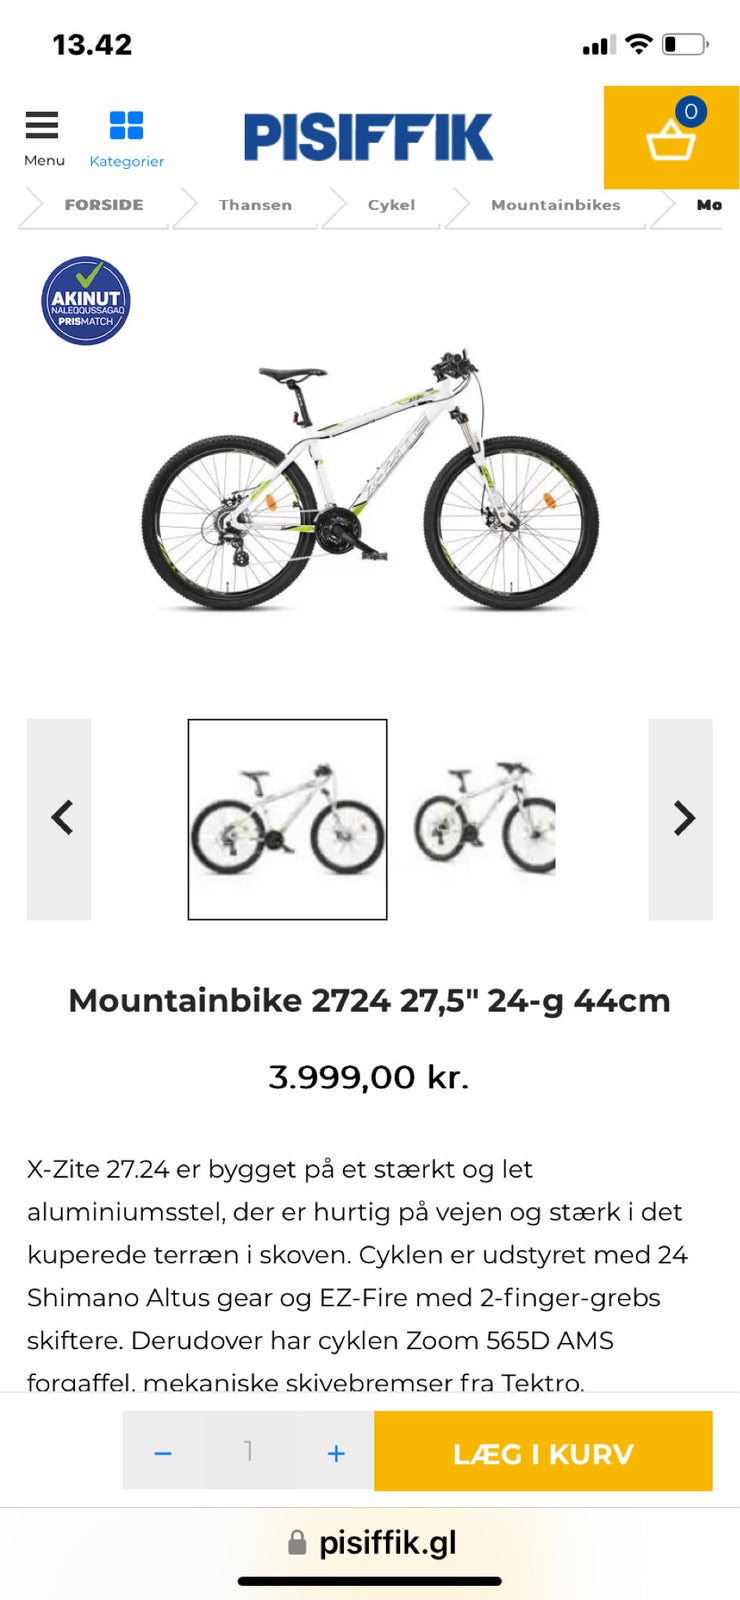 X-zite, anden mountainbike, 24 gear